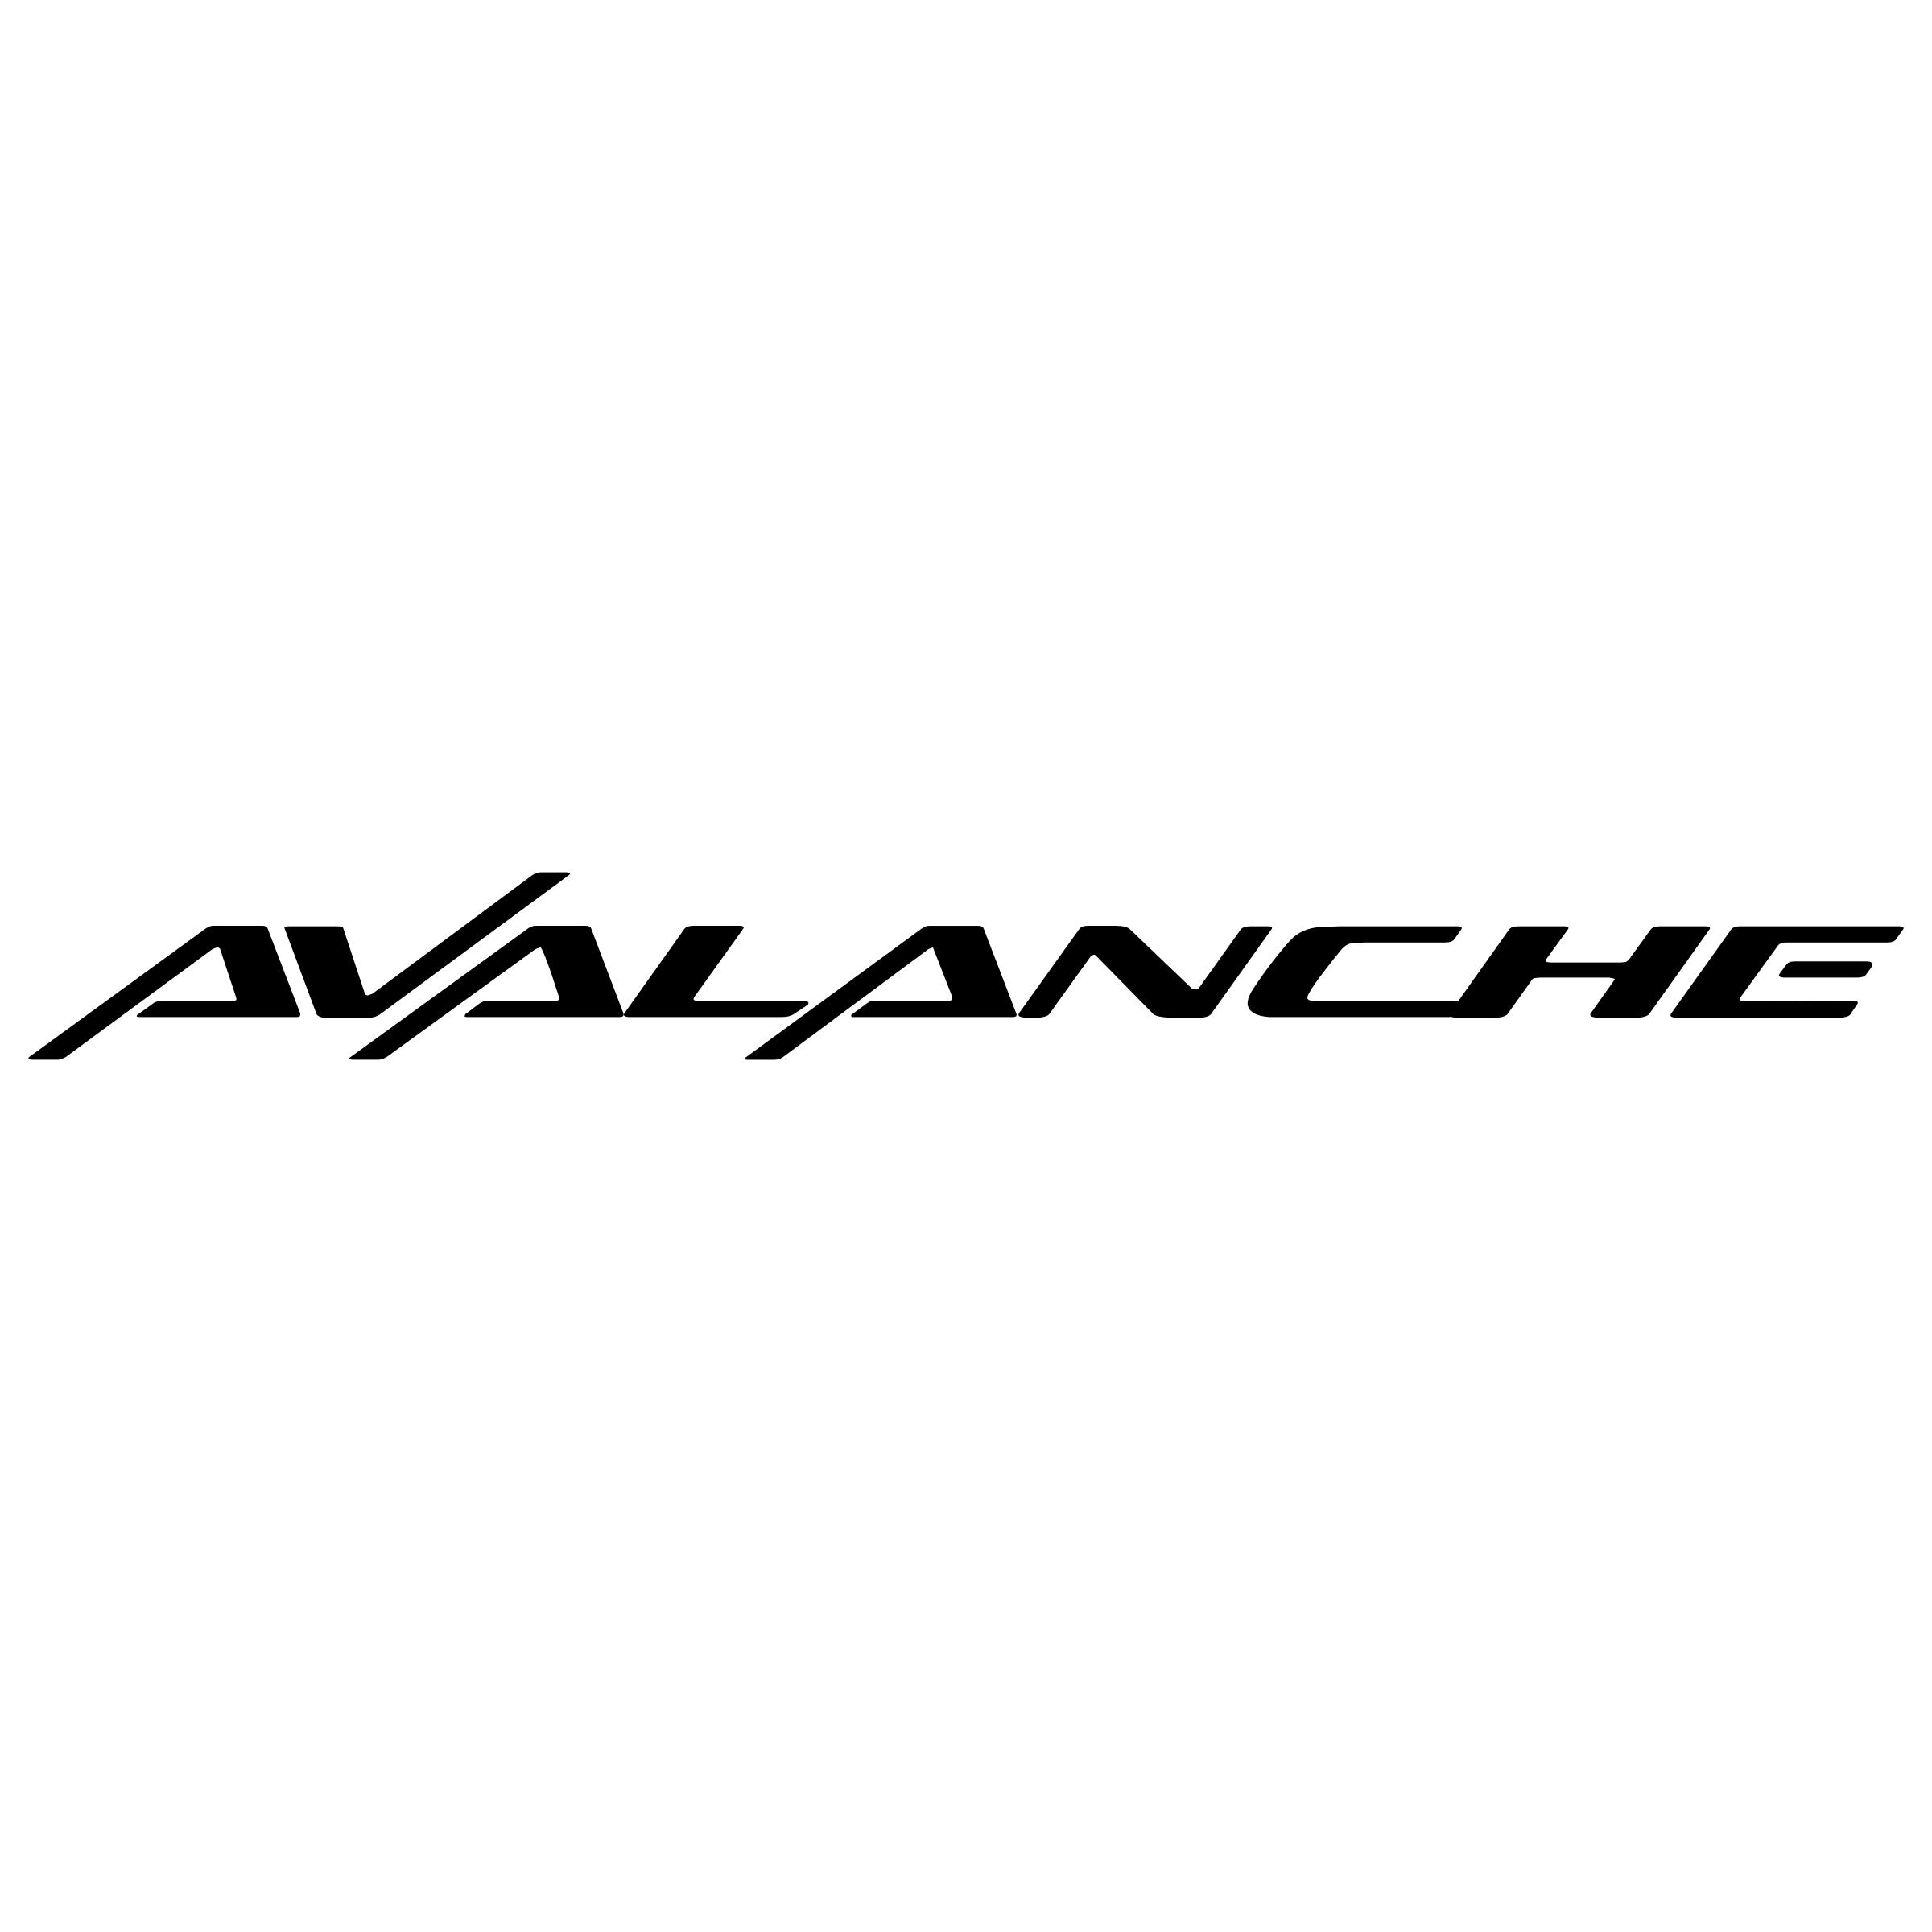 Avalance Logo - Avalanche Logo PNG Transparent & SVG Vector - Freebie Supply